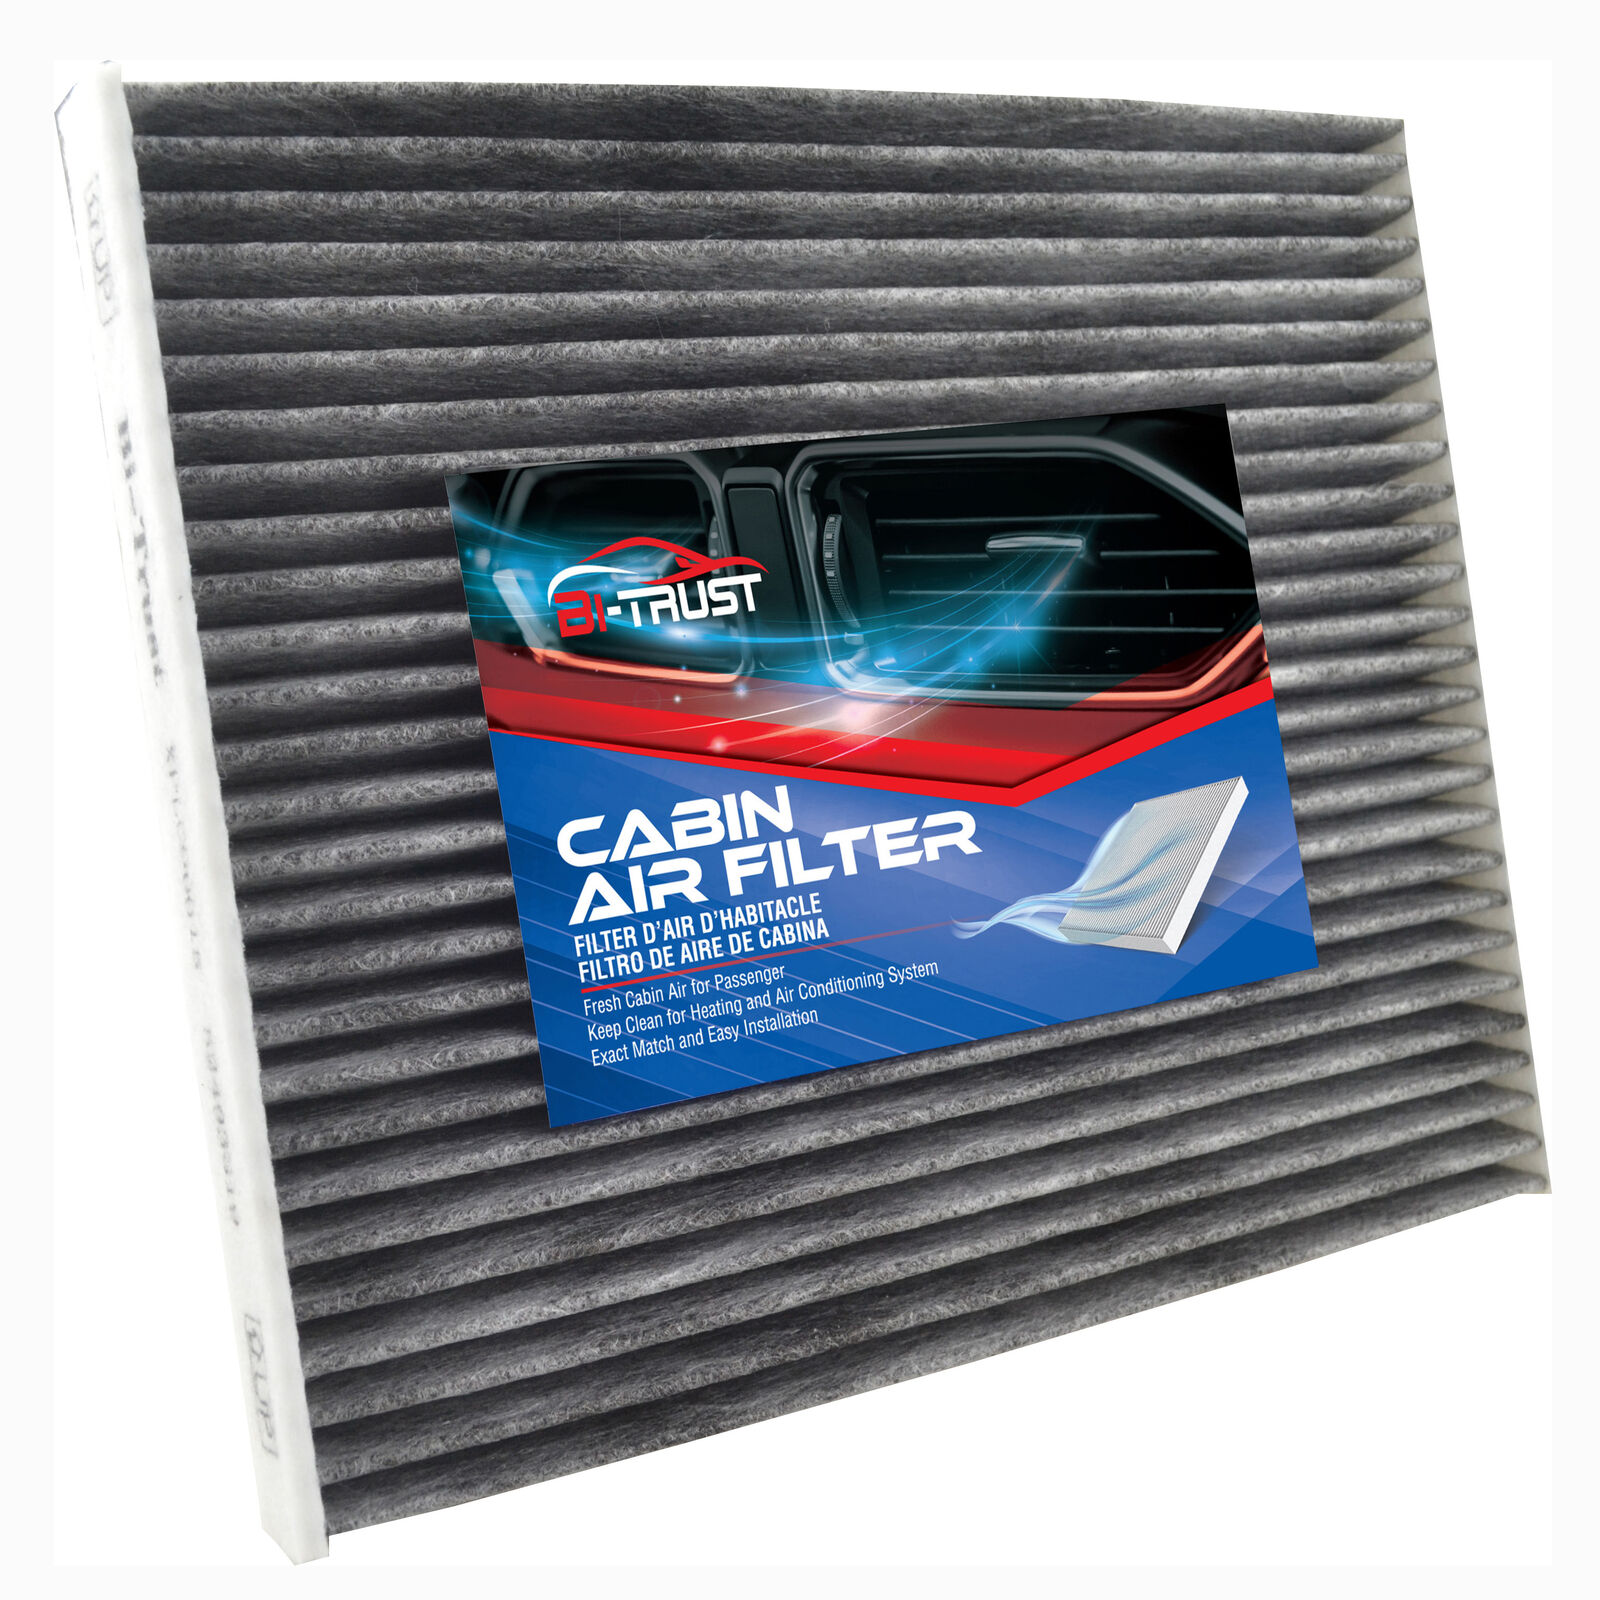 Cabin Air Filter for Chevrolet Chevy Cobalt HHR Pontiac G5 Pursuit Saturn ION